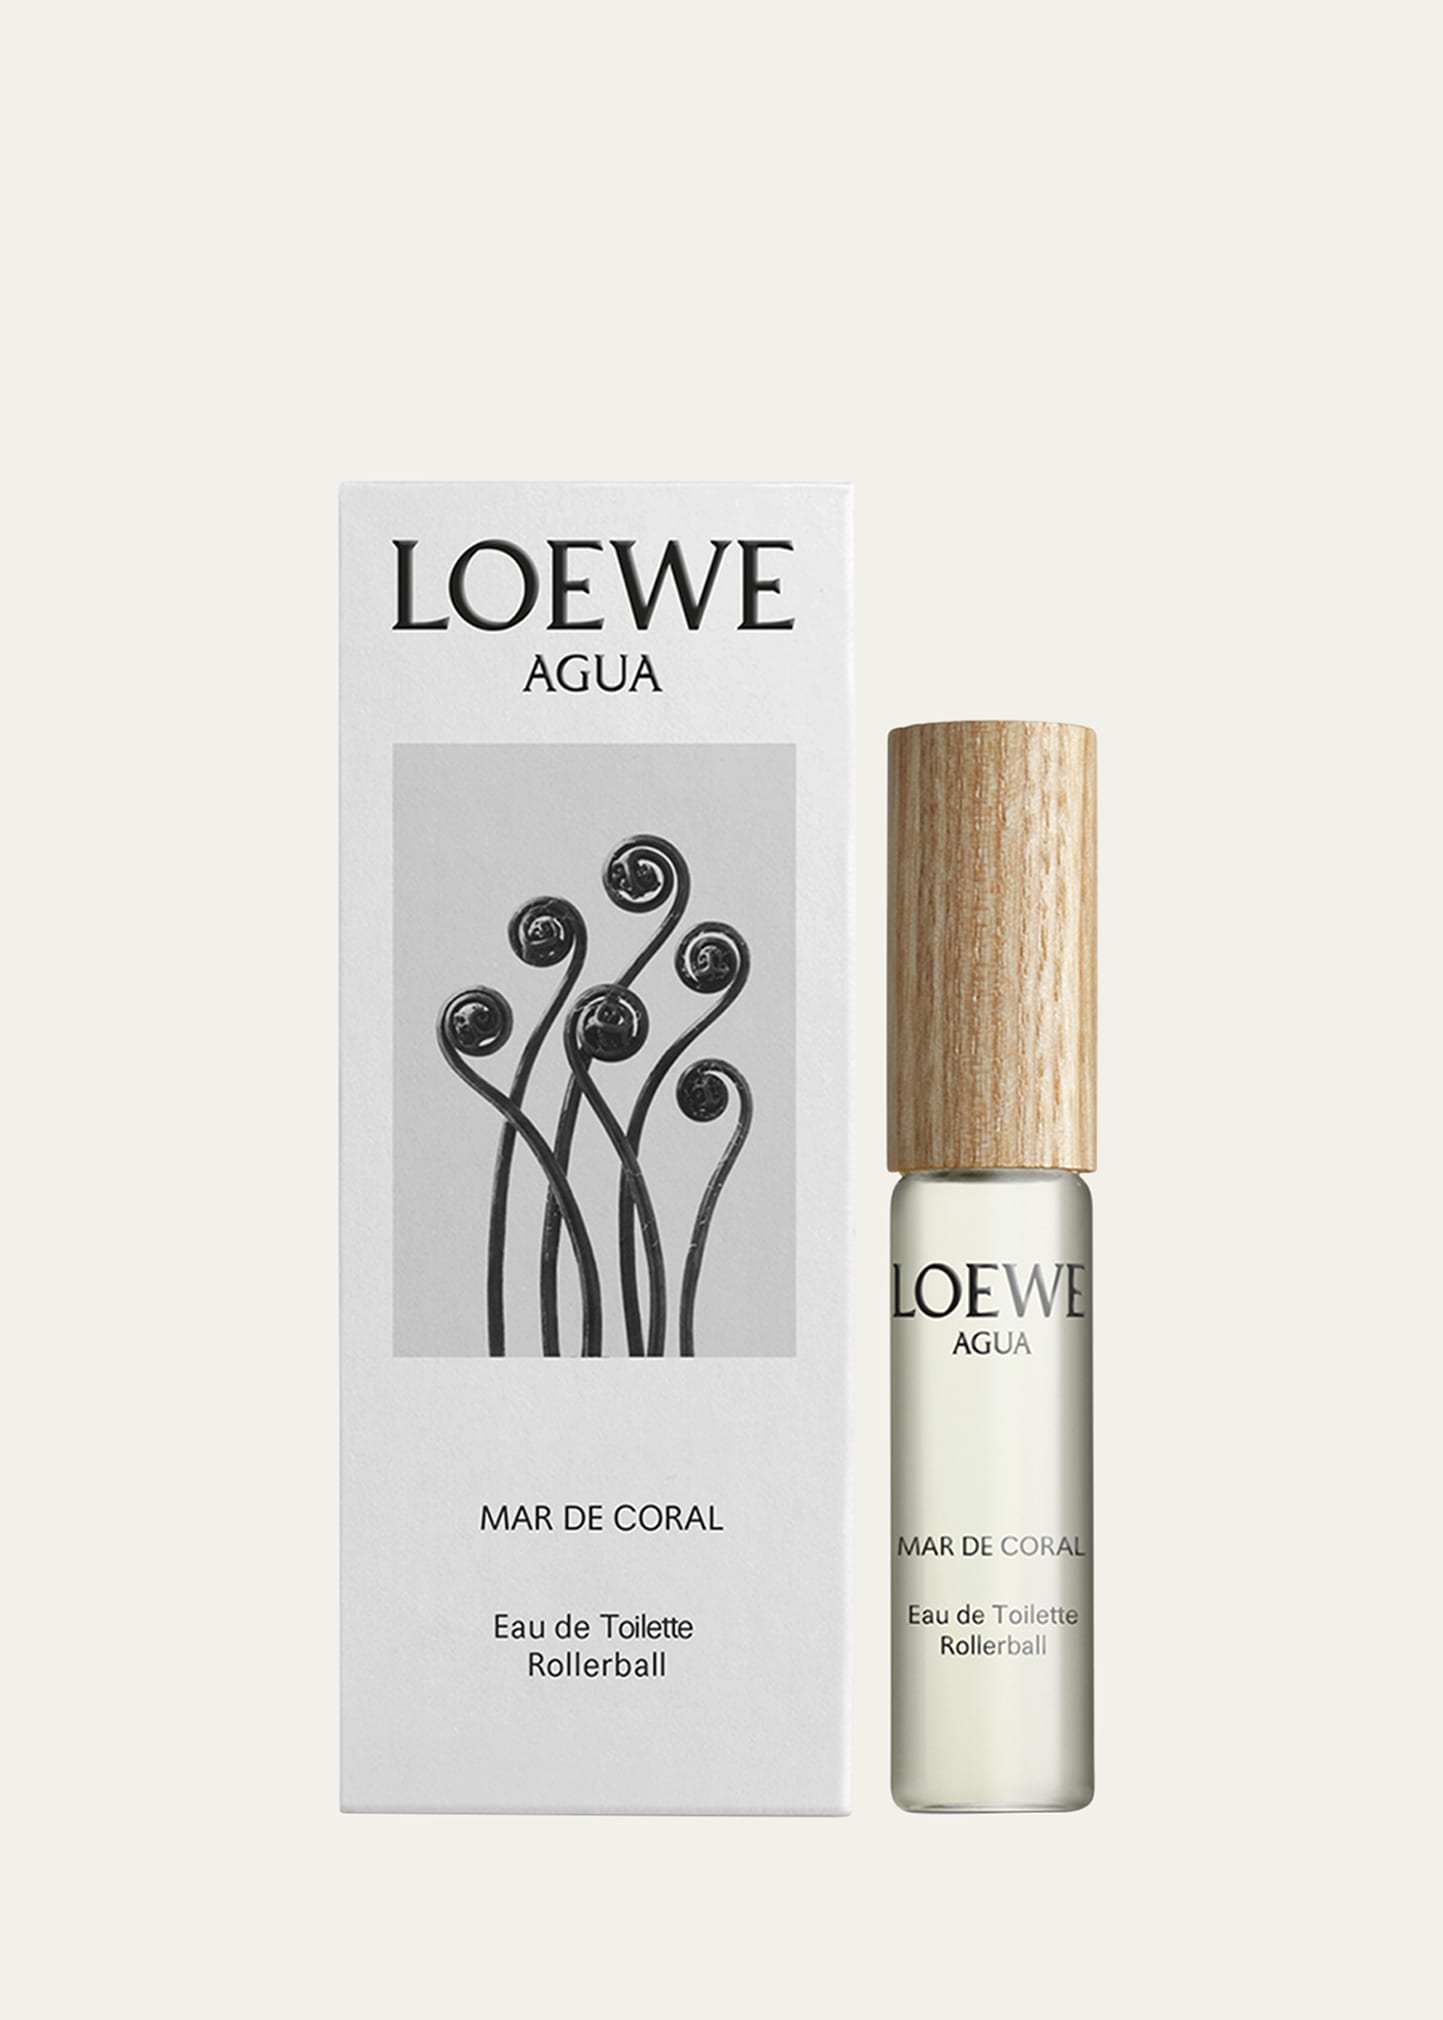 Loewe Yours with any $99 Loewe Purchase